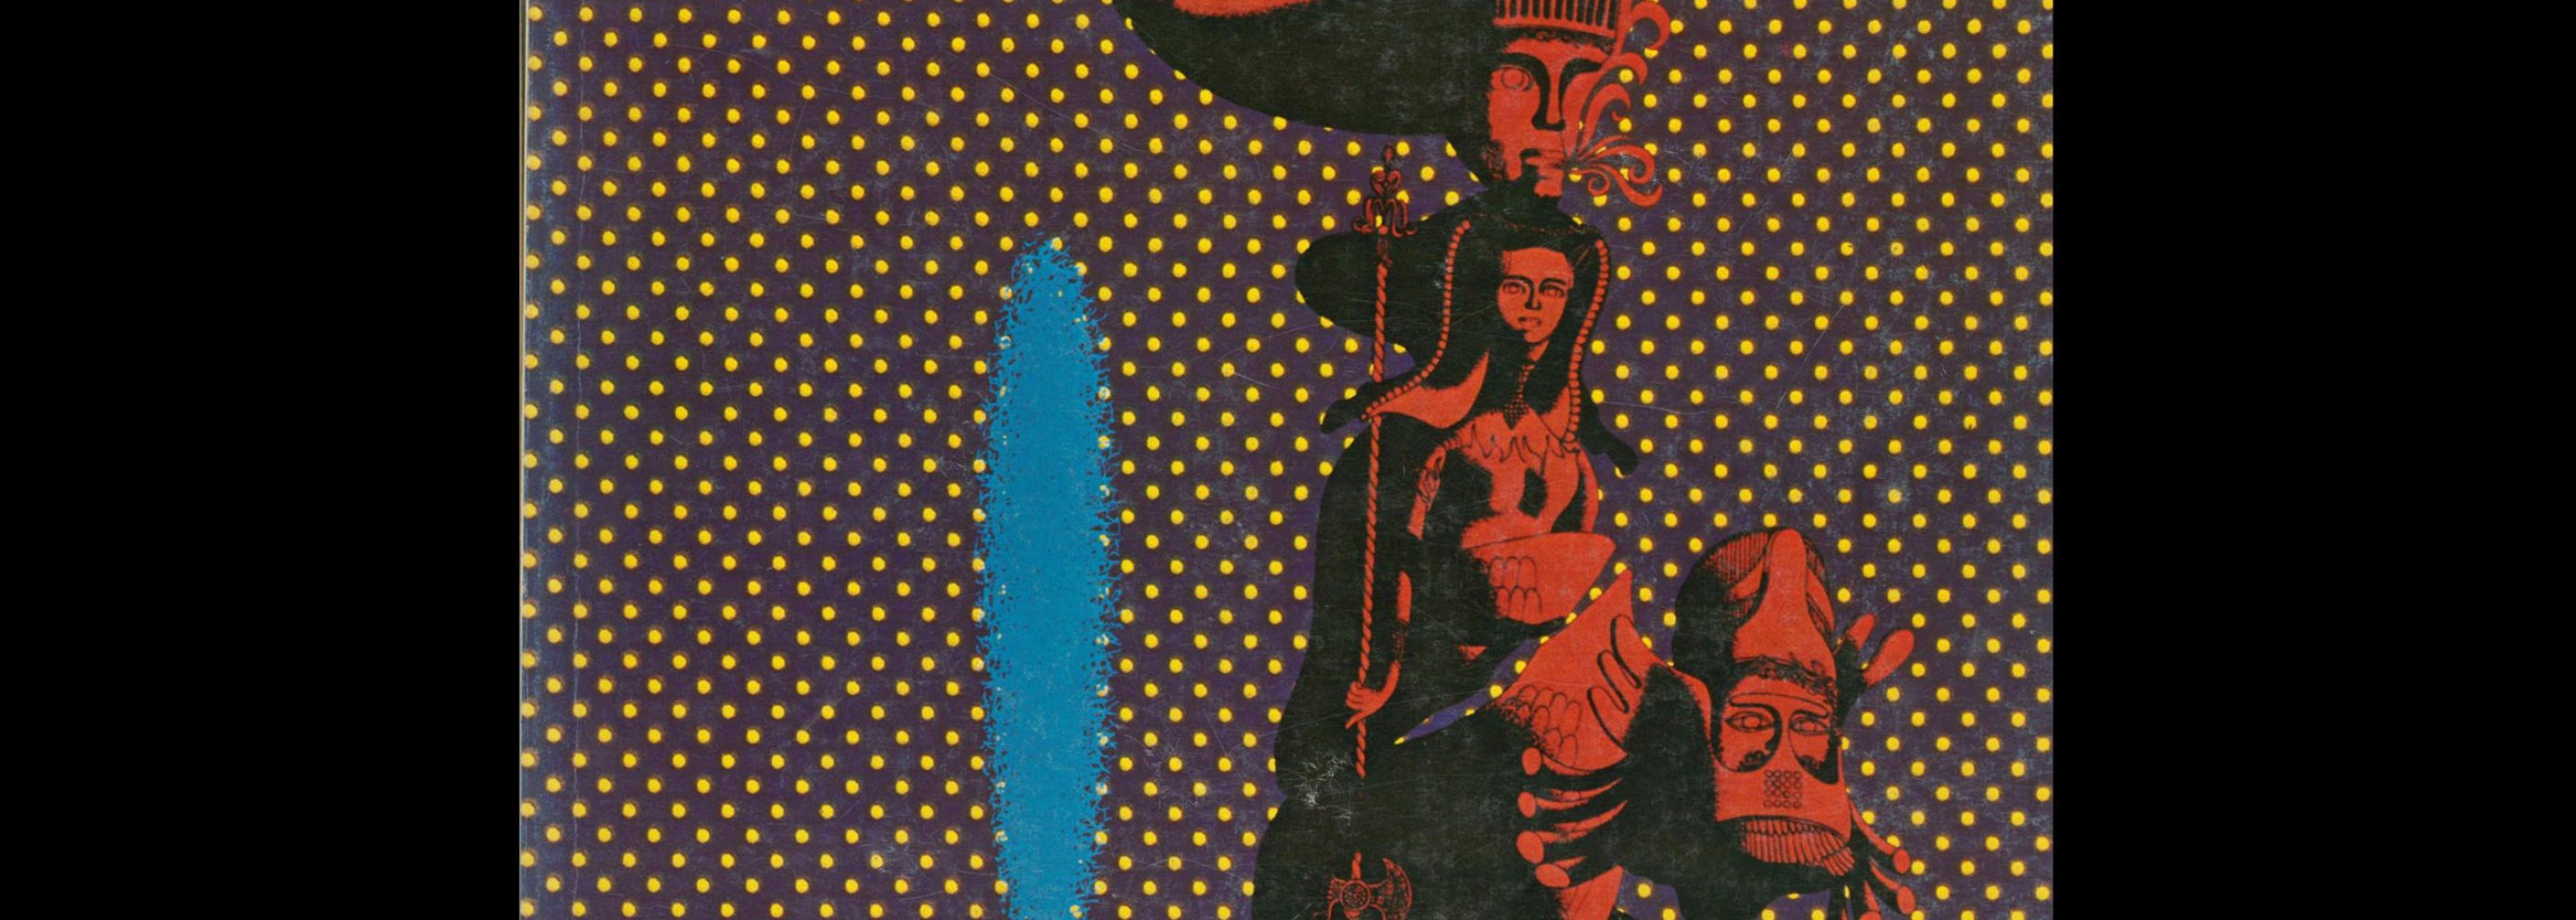 Novum Gebrauchsgraphik, 11, 1978. Cover design by Kondow Satoshi